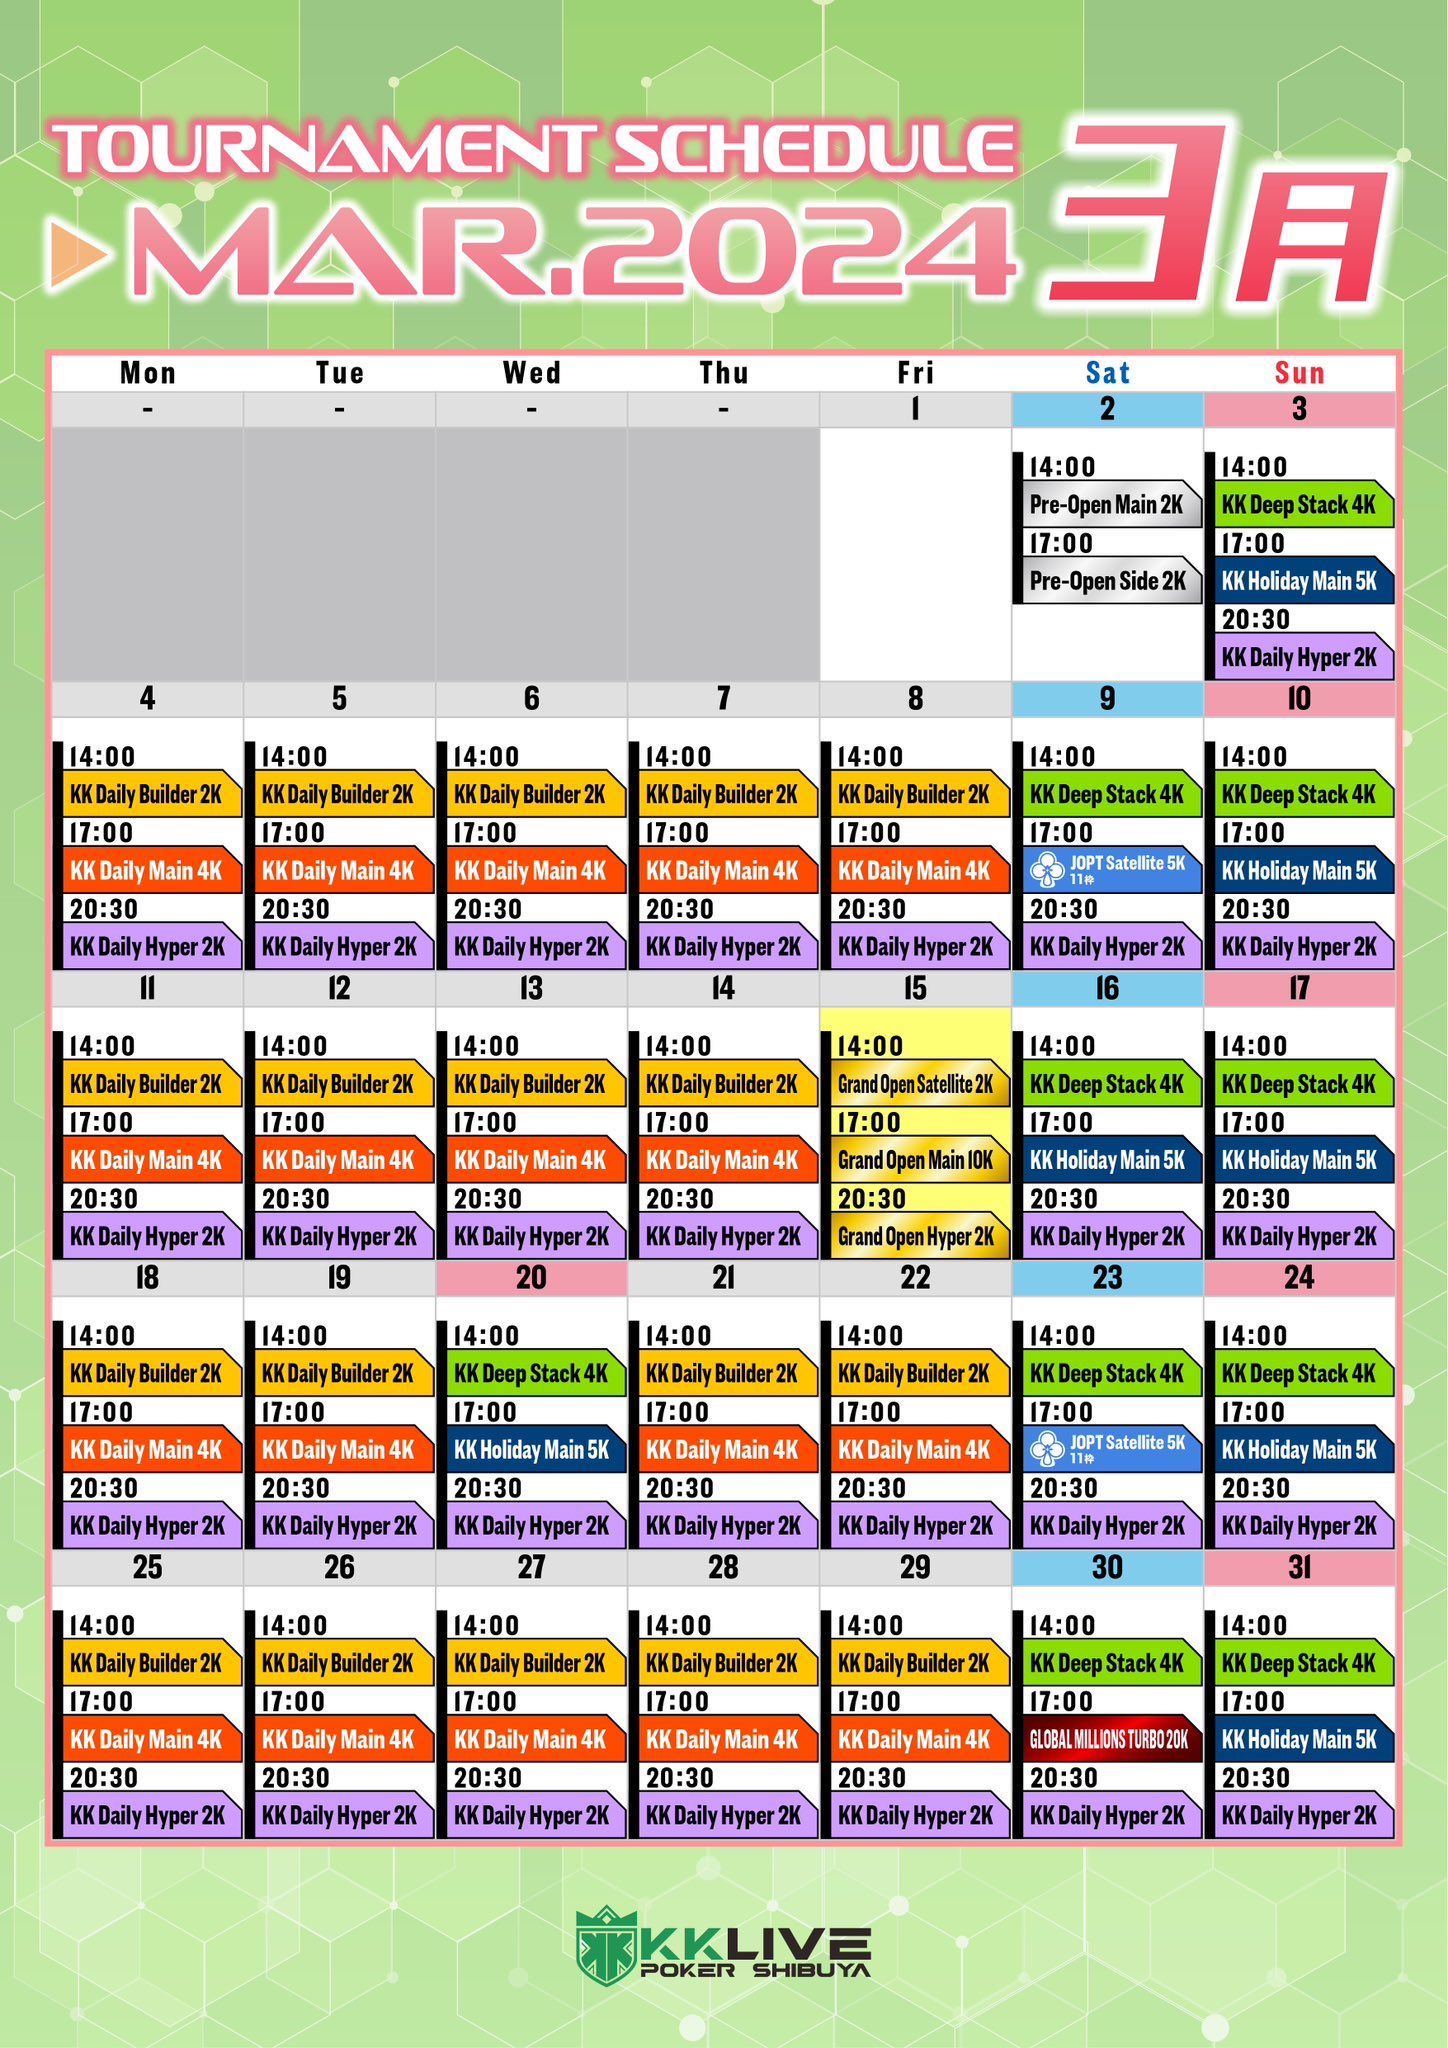 KKLP SHIBUYA march schedule